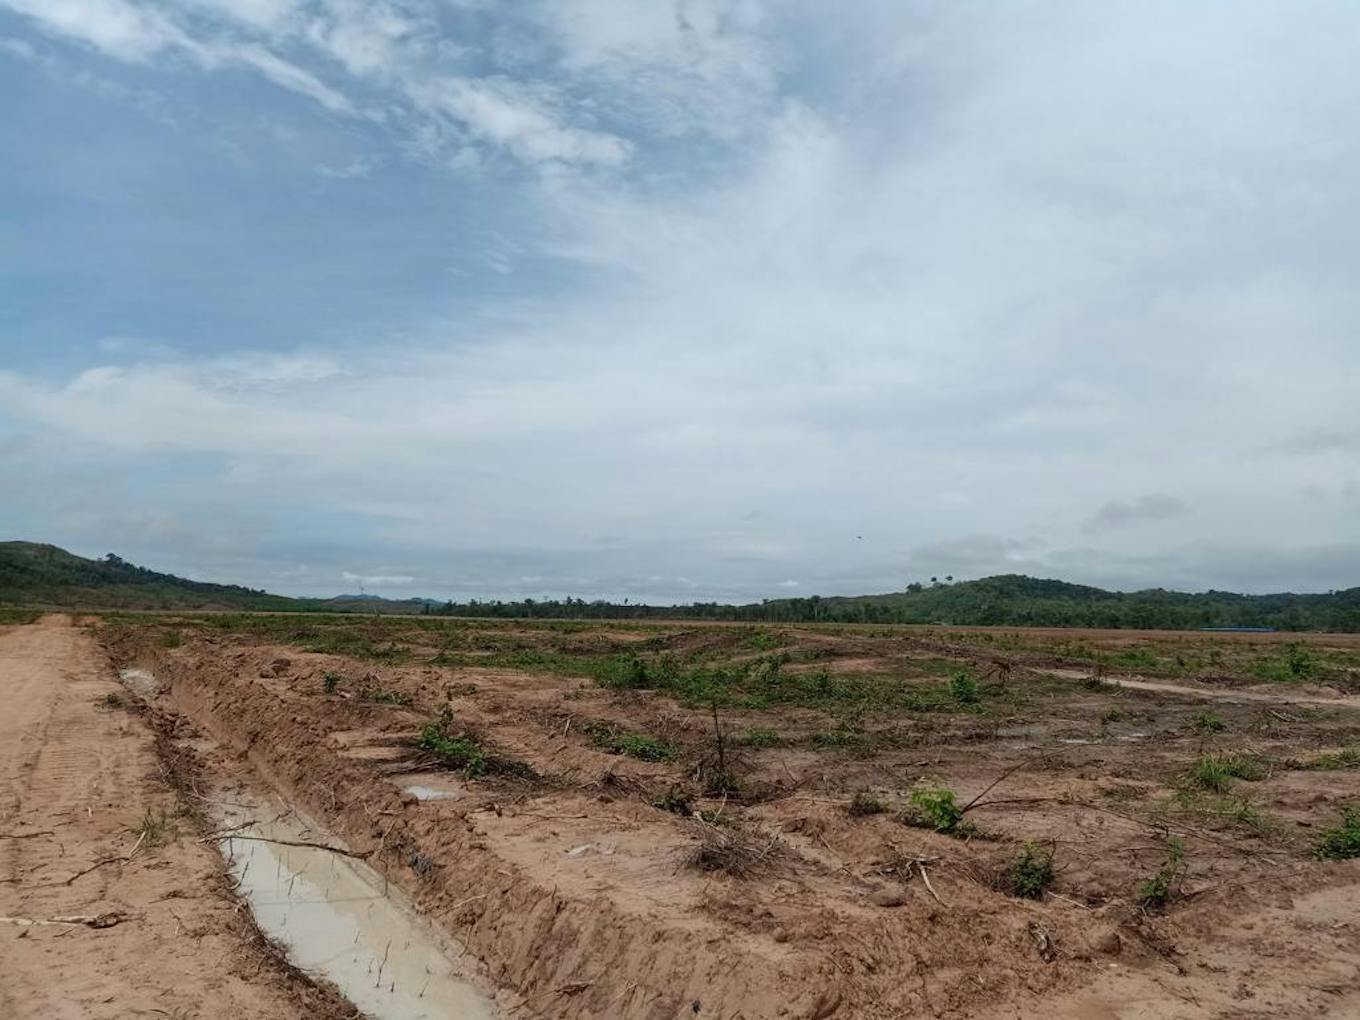 Land bulldozed by HAGL near Mass Village, Ratanakiri